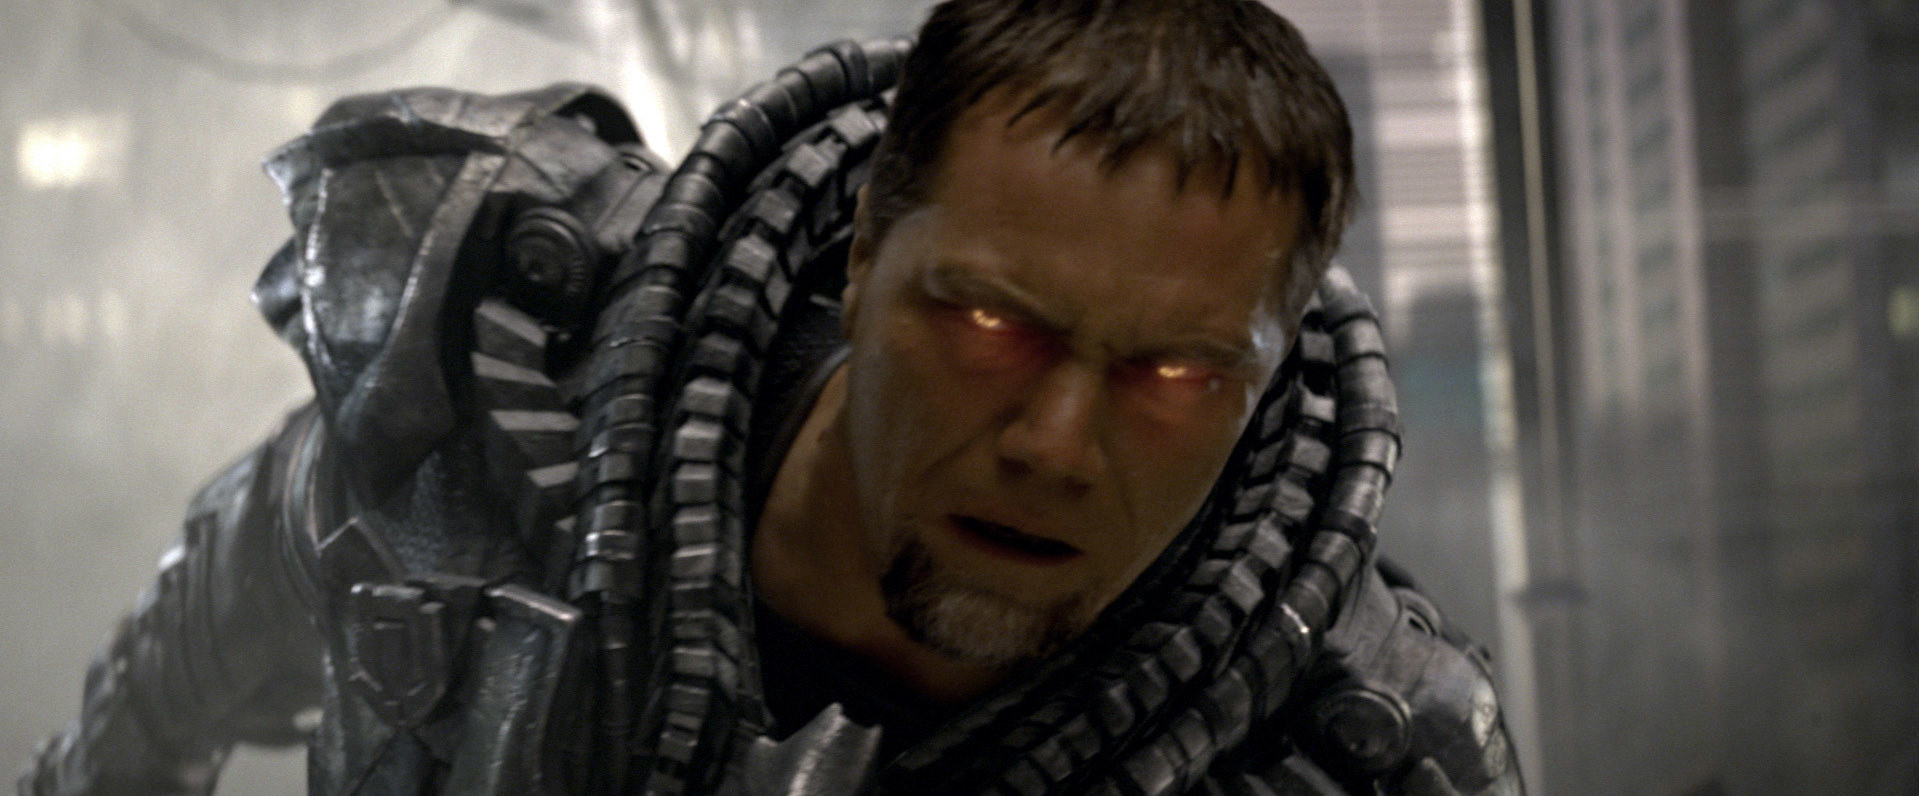 Michael Shannon as General Zod